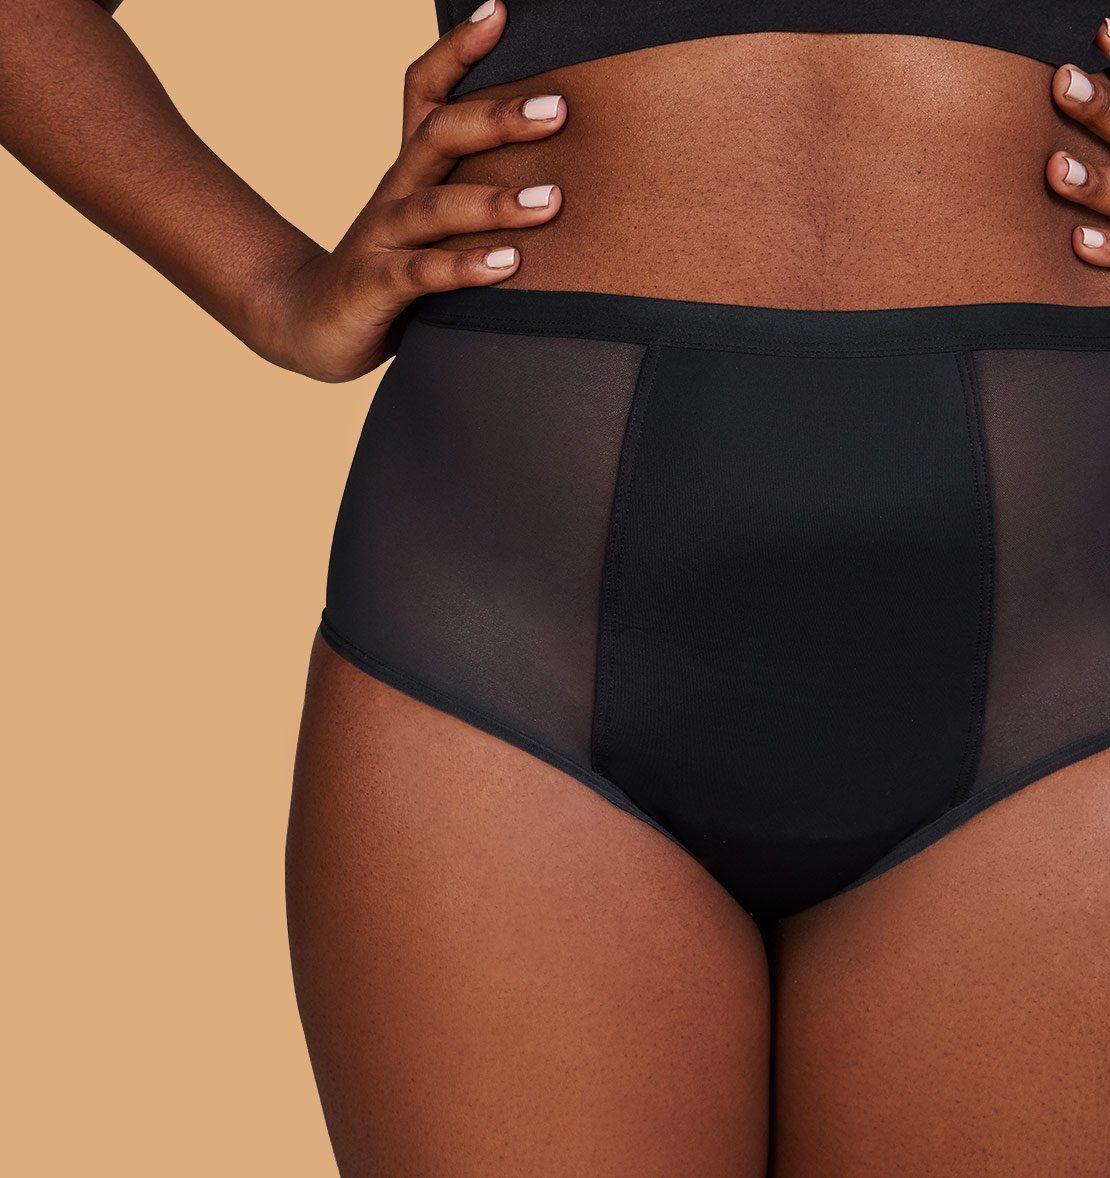 Proof Period Underwear Review: Do Period Undies Work?? - Fairly Southern